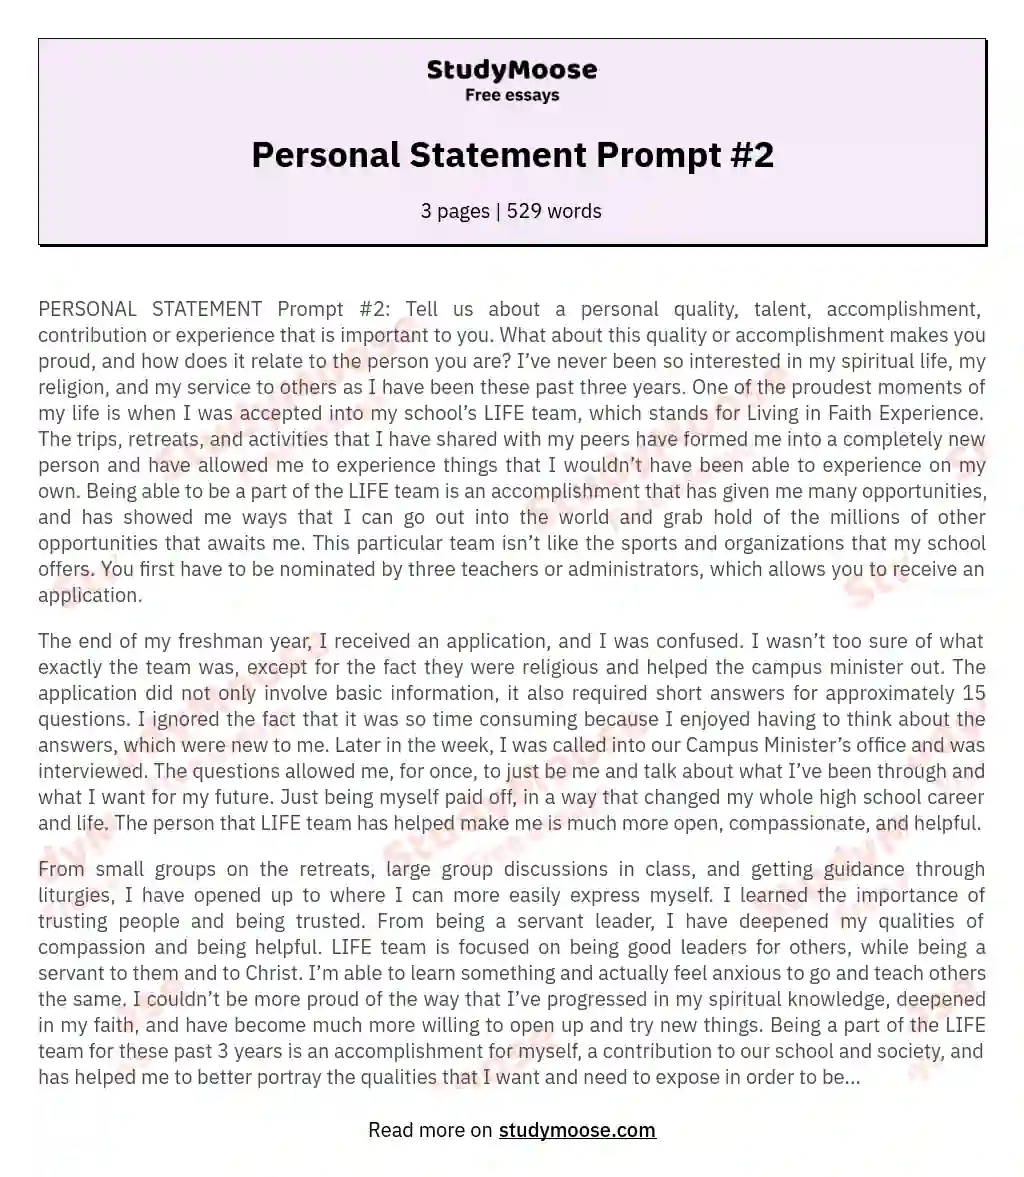 Personal Statement Prompt #2 essay